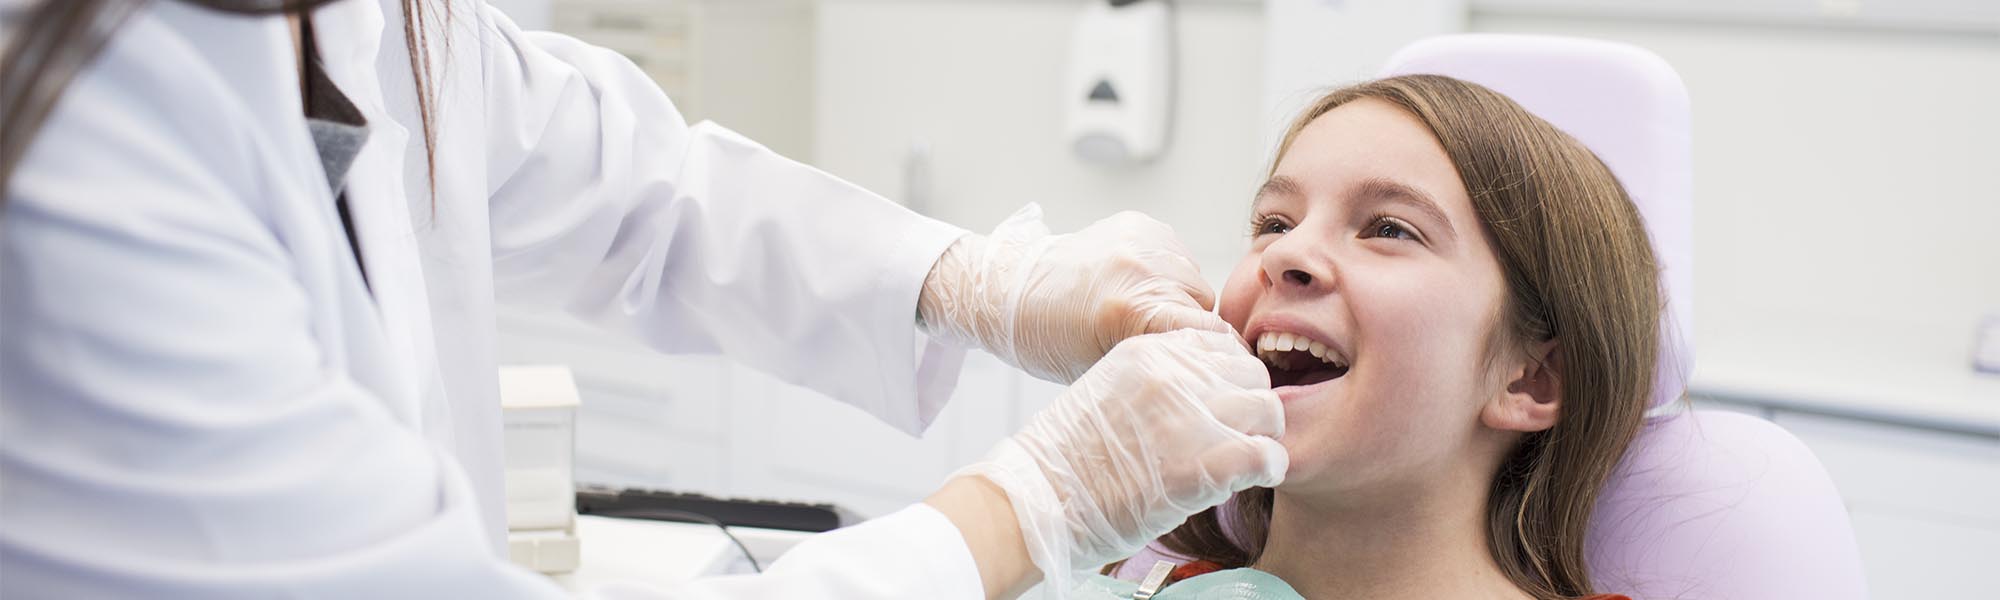 Pediatric Dentist Treatments Cerritos CA